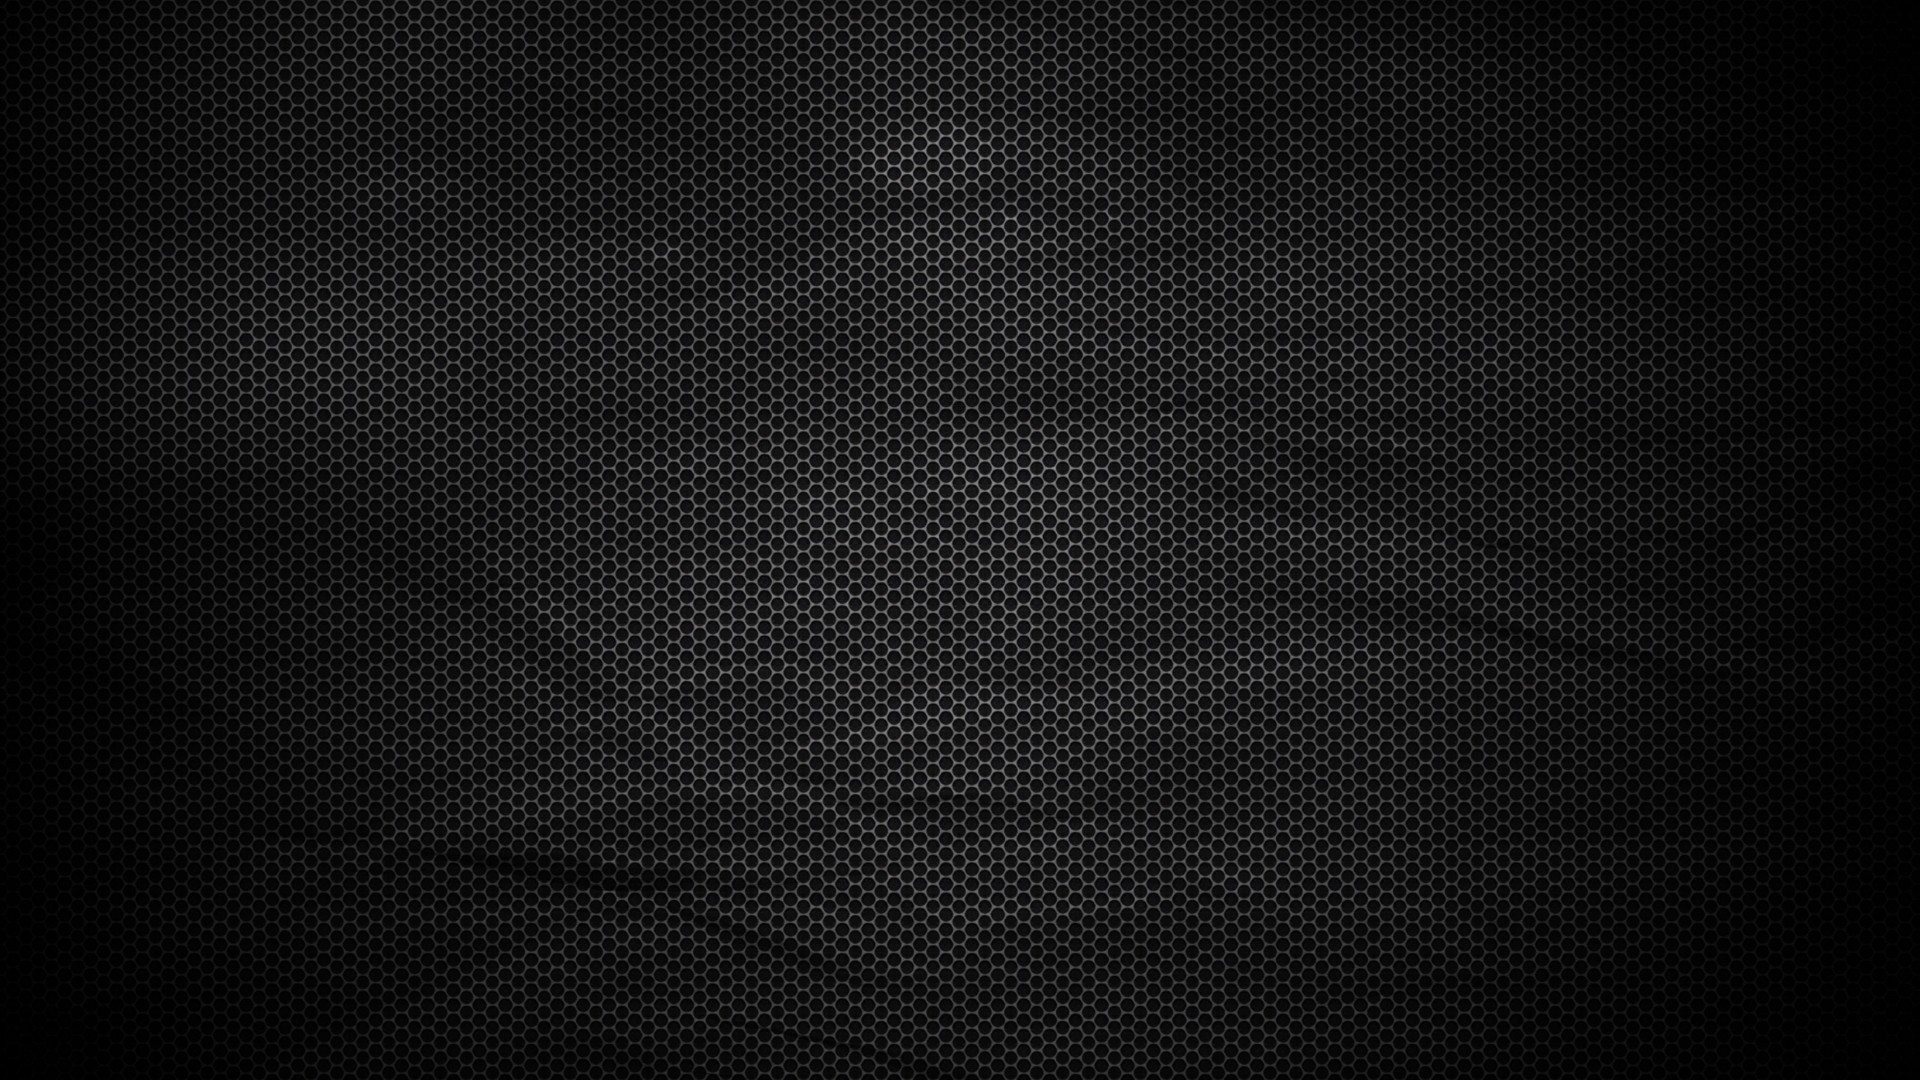 Black Theme Wallpaper 1080p 70 Images